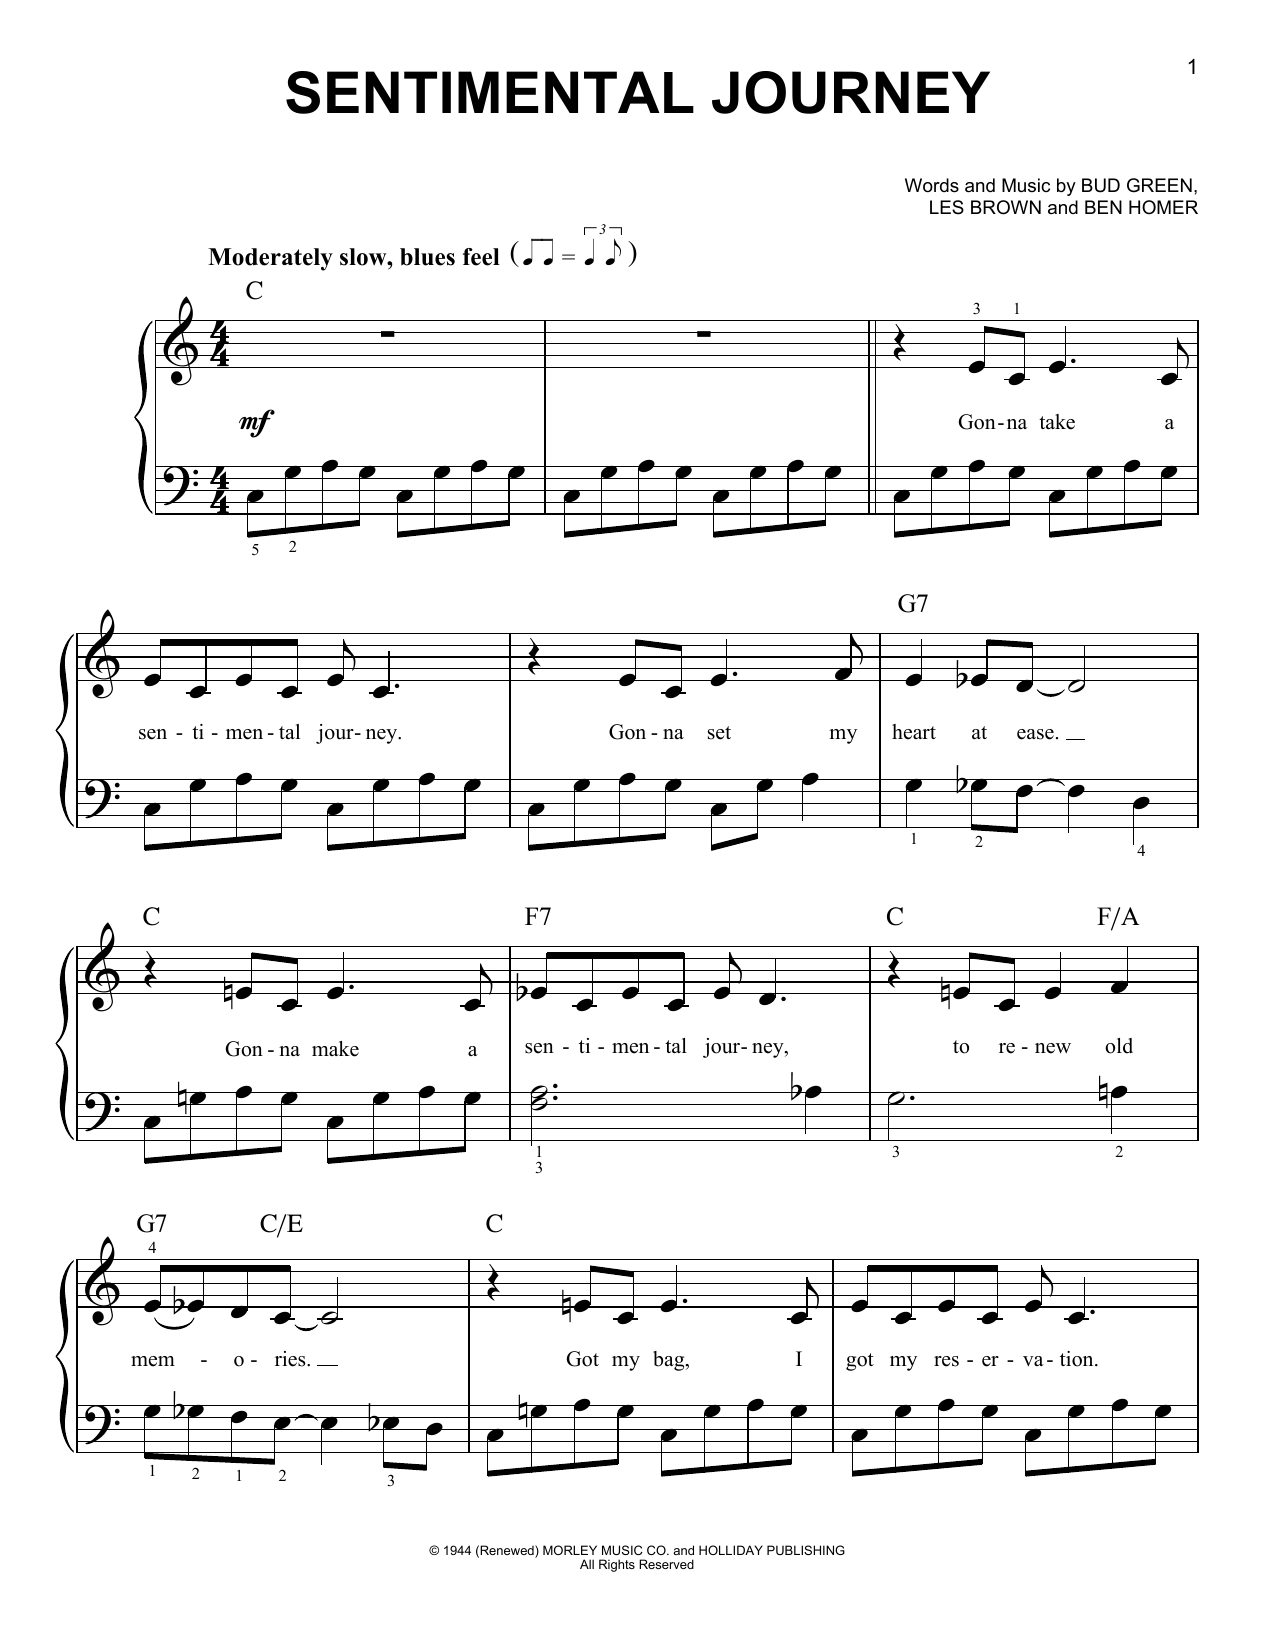 Doris Day Sentimental Journey Sheet Music Notes & Chords for Lead Sheet / Fake Book - Download or Print PDF